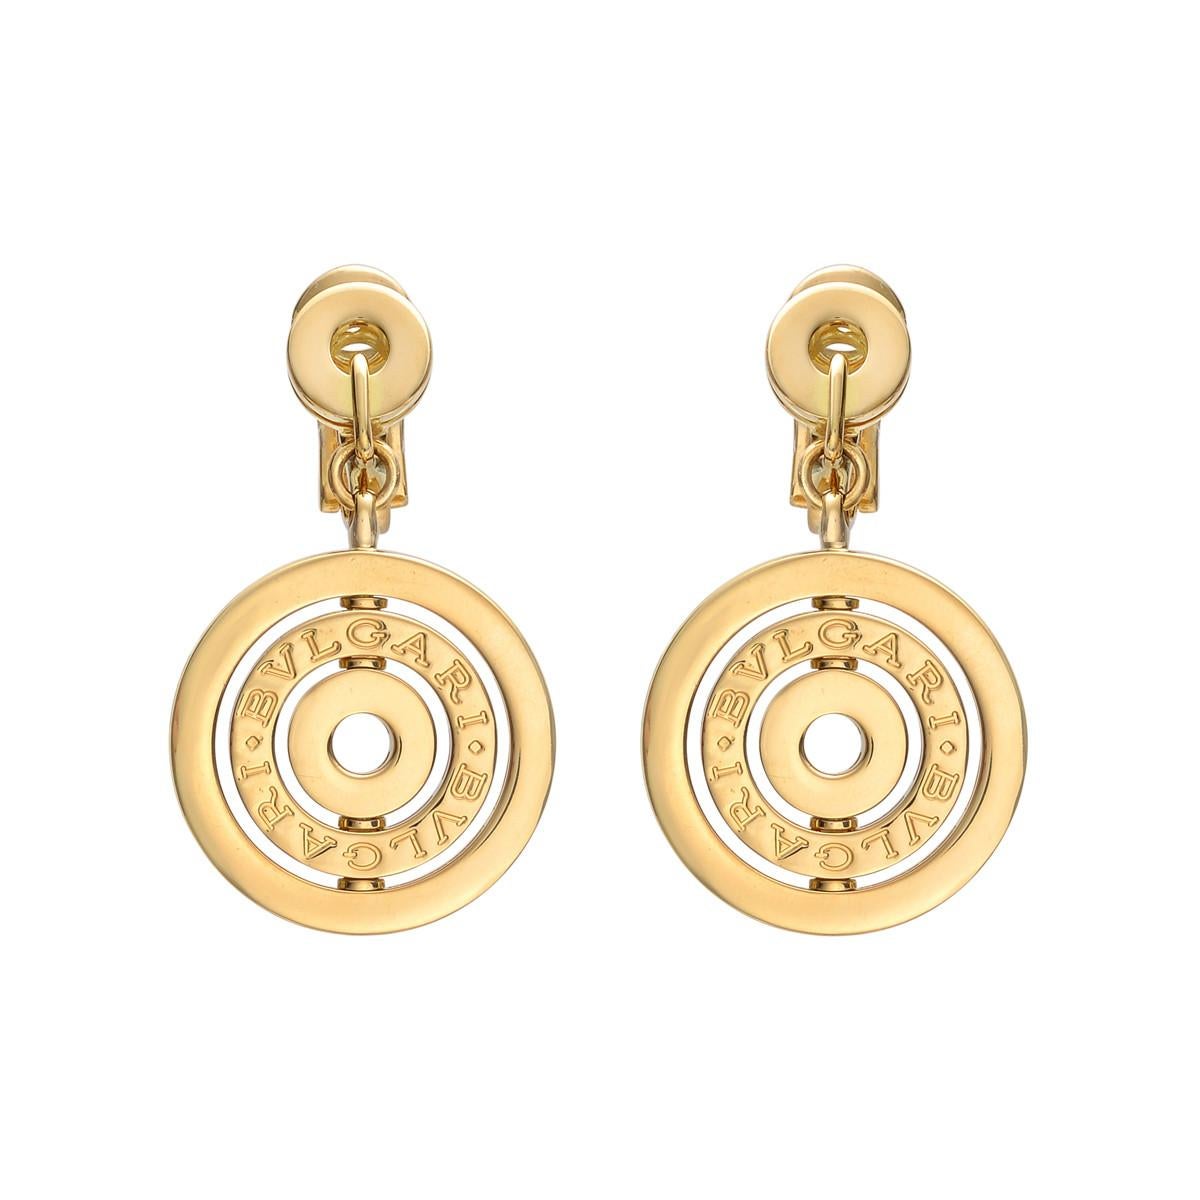 18k gold earrings price